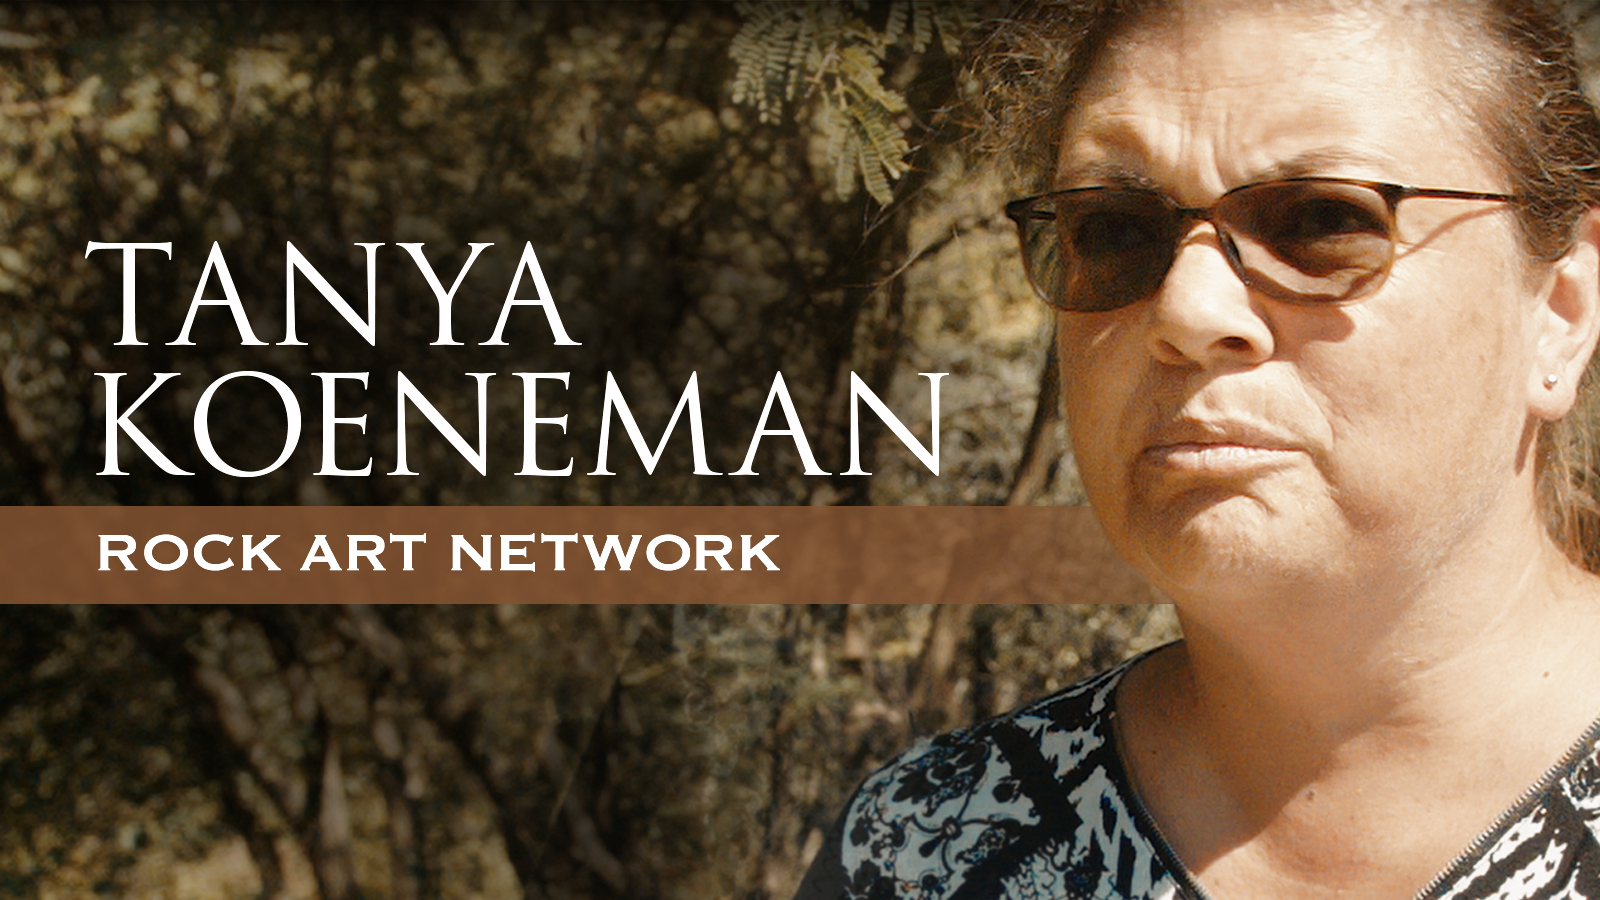 The Rock Art Network Tanya Koeneman